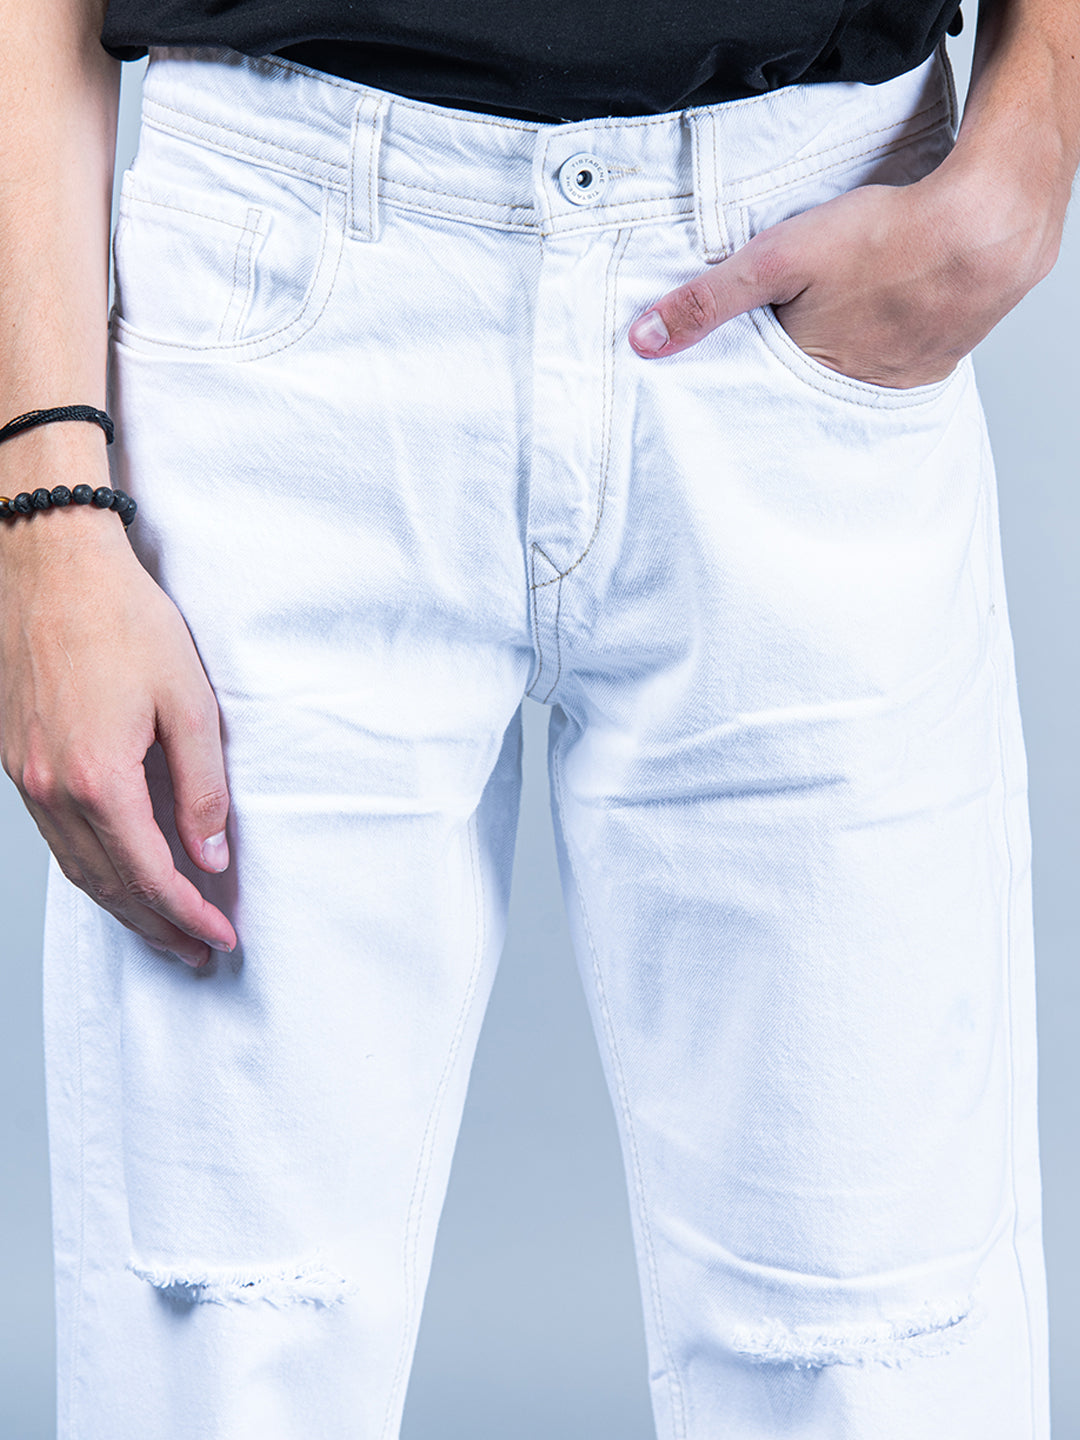 True Religion Jeans Men's BILLY Giant Big T Body rinse WHITE 31 28858WGGBT  | eBay